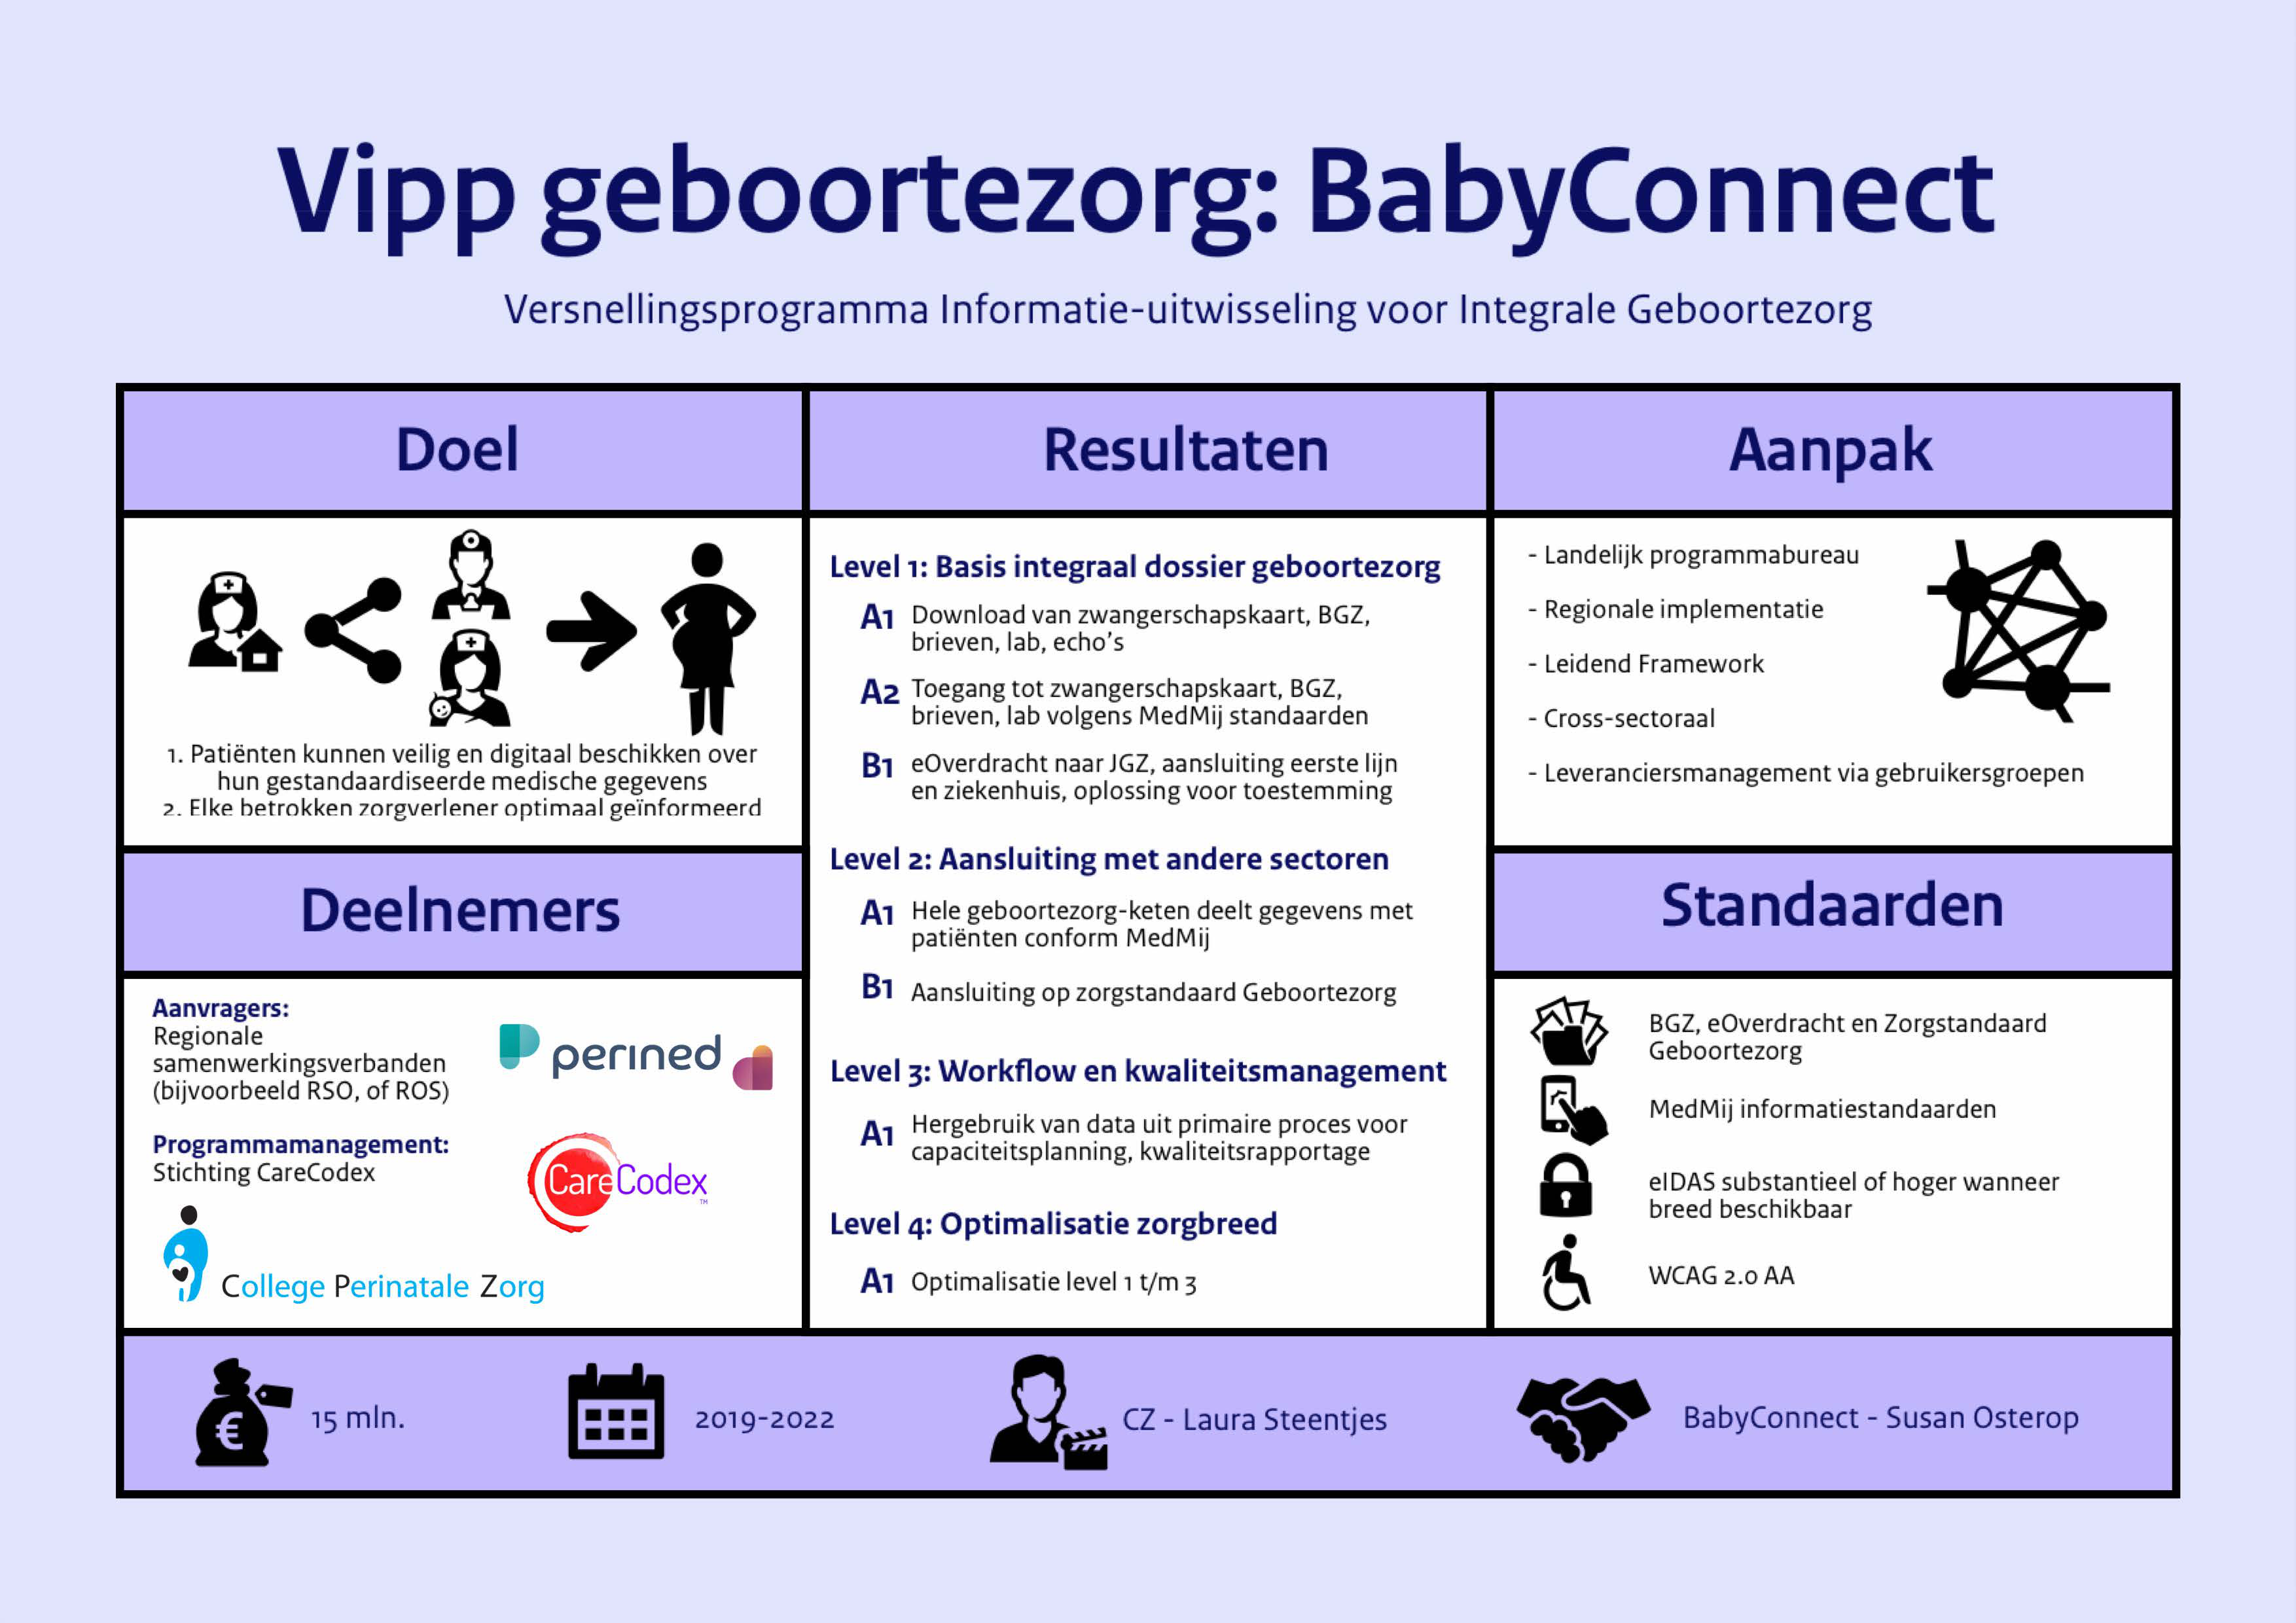 VIPP BabyConnect - Geboortezorg